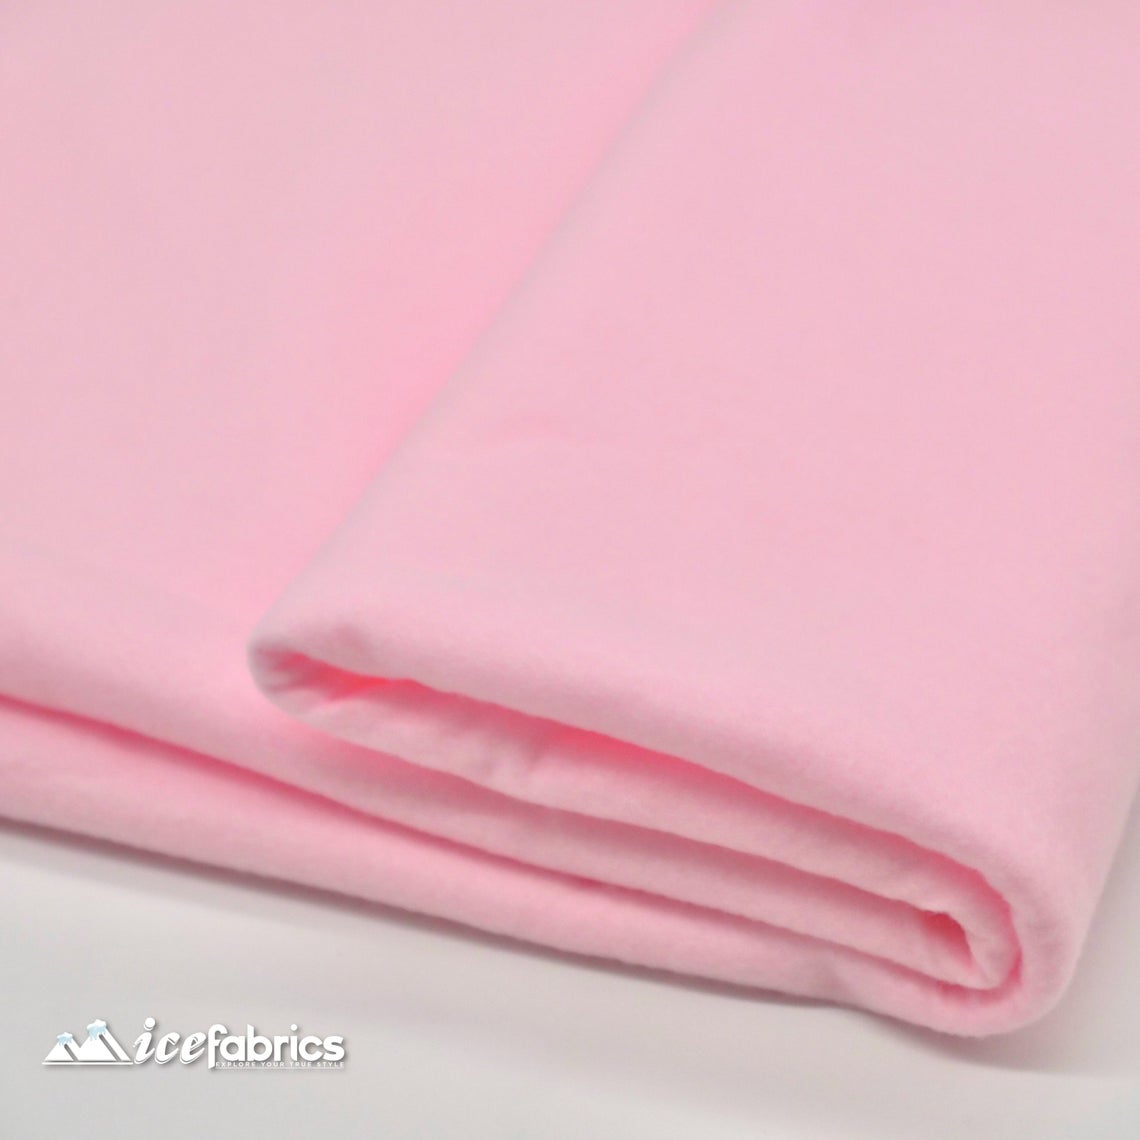 Acrylic Felt Fabric By The Roll | 20 yards | Wholesale Fabric ICE FABRICS Pink